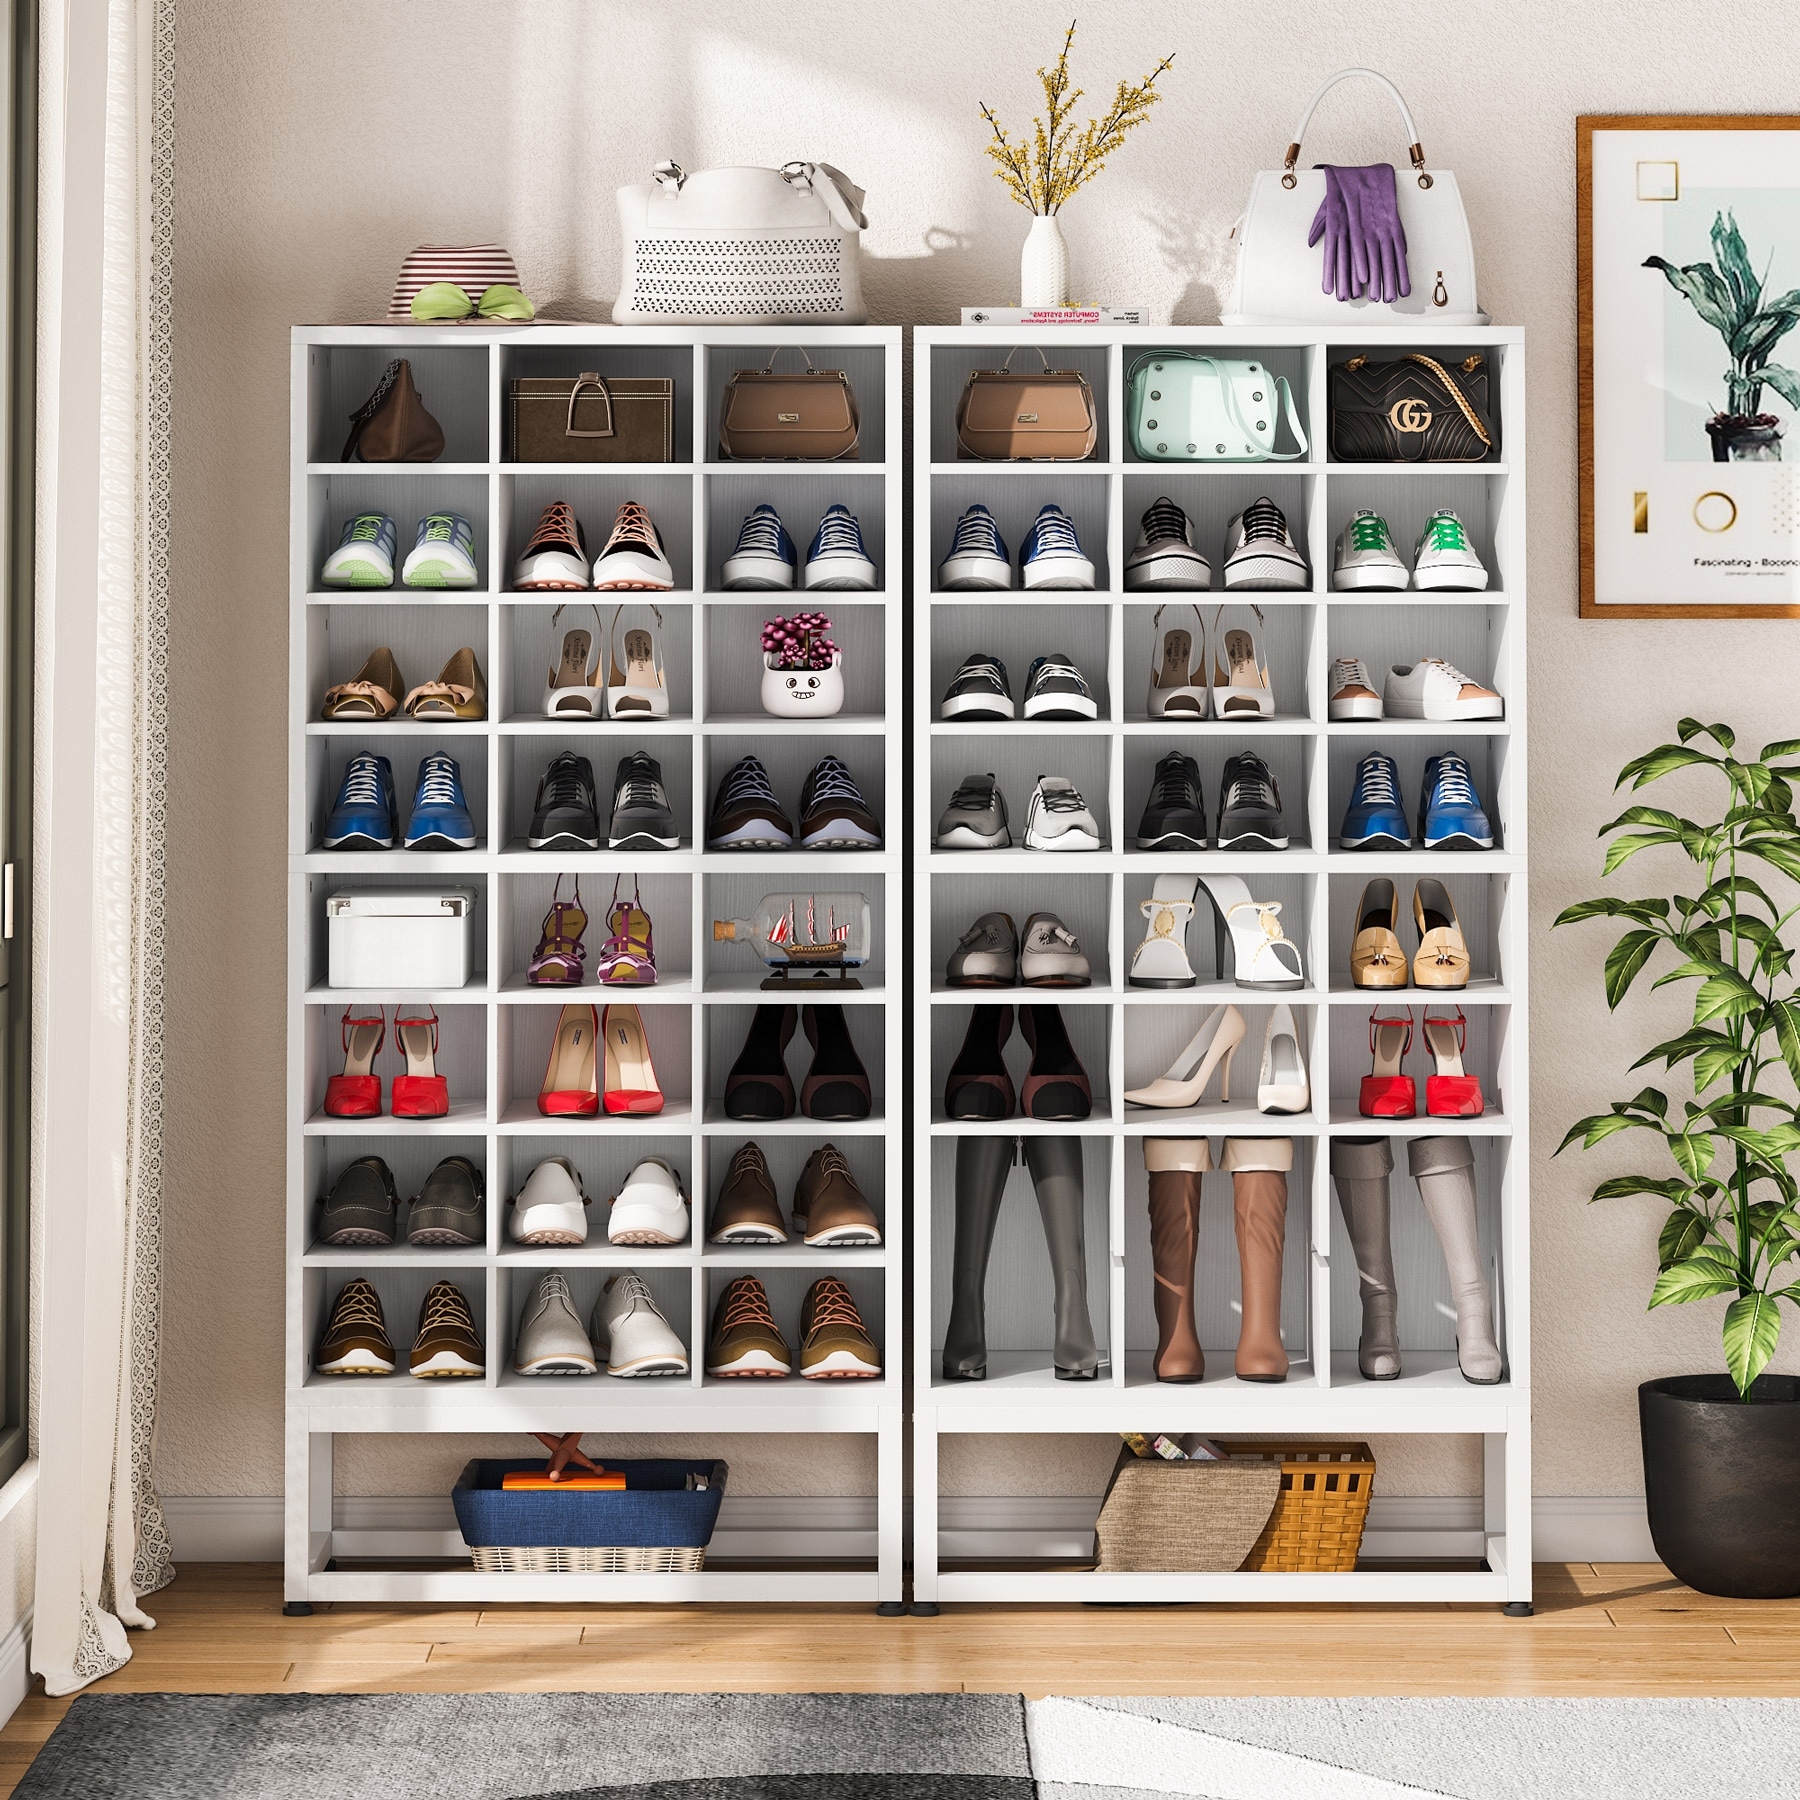 https://ak1.ostkcdn.com/images/products/is/images/direct/234a4f8ef90cc62d83b9d10d311cc12112342a2d/White-24-Pair-Shoe-Storage-Cabinet%2C-8-Tier-Feestanding-Cube-Shoe-Rack-Closet-Organizers-for-Bedroom%2C-Hallway.jpg